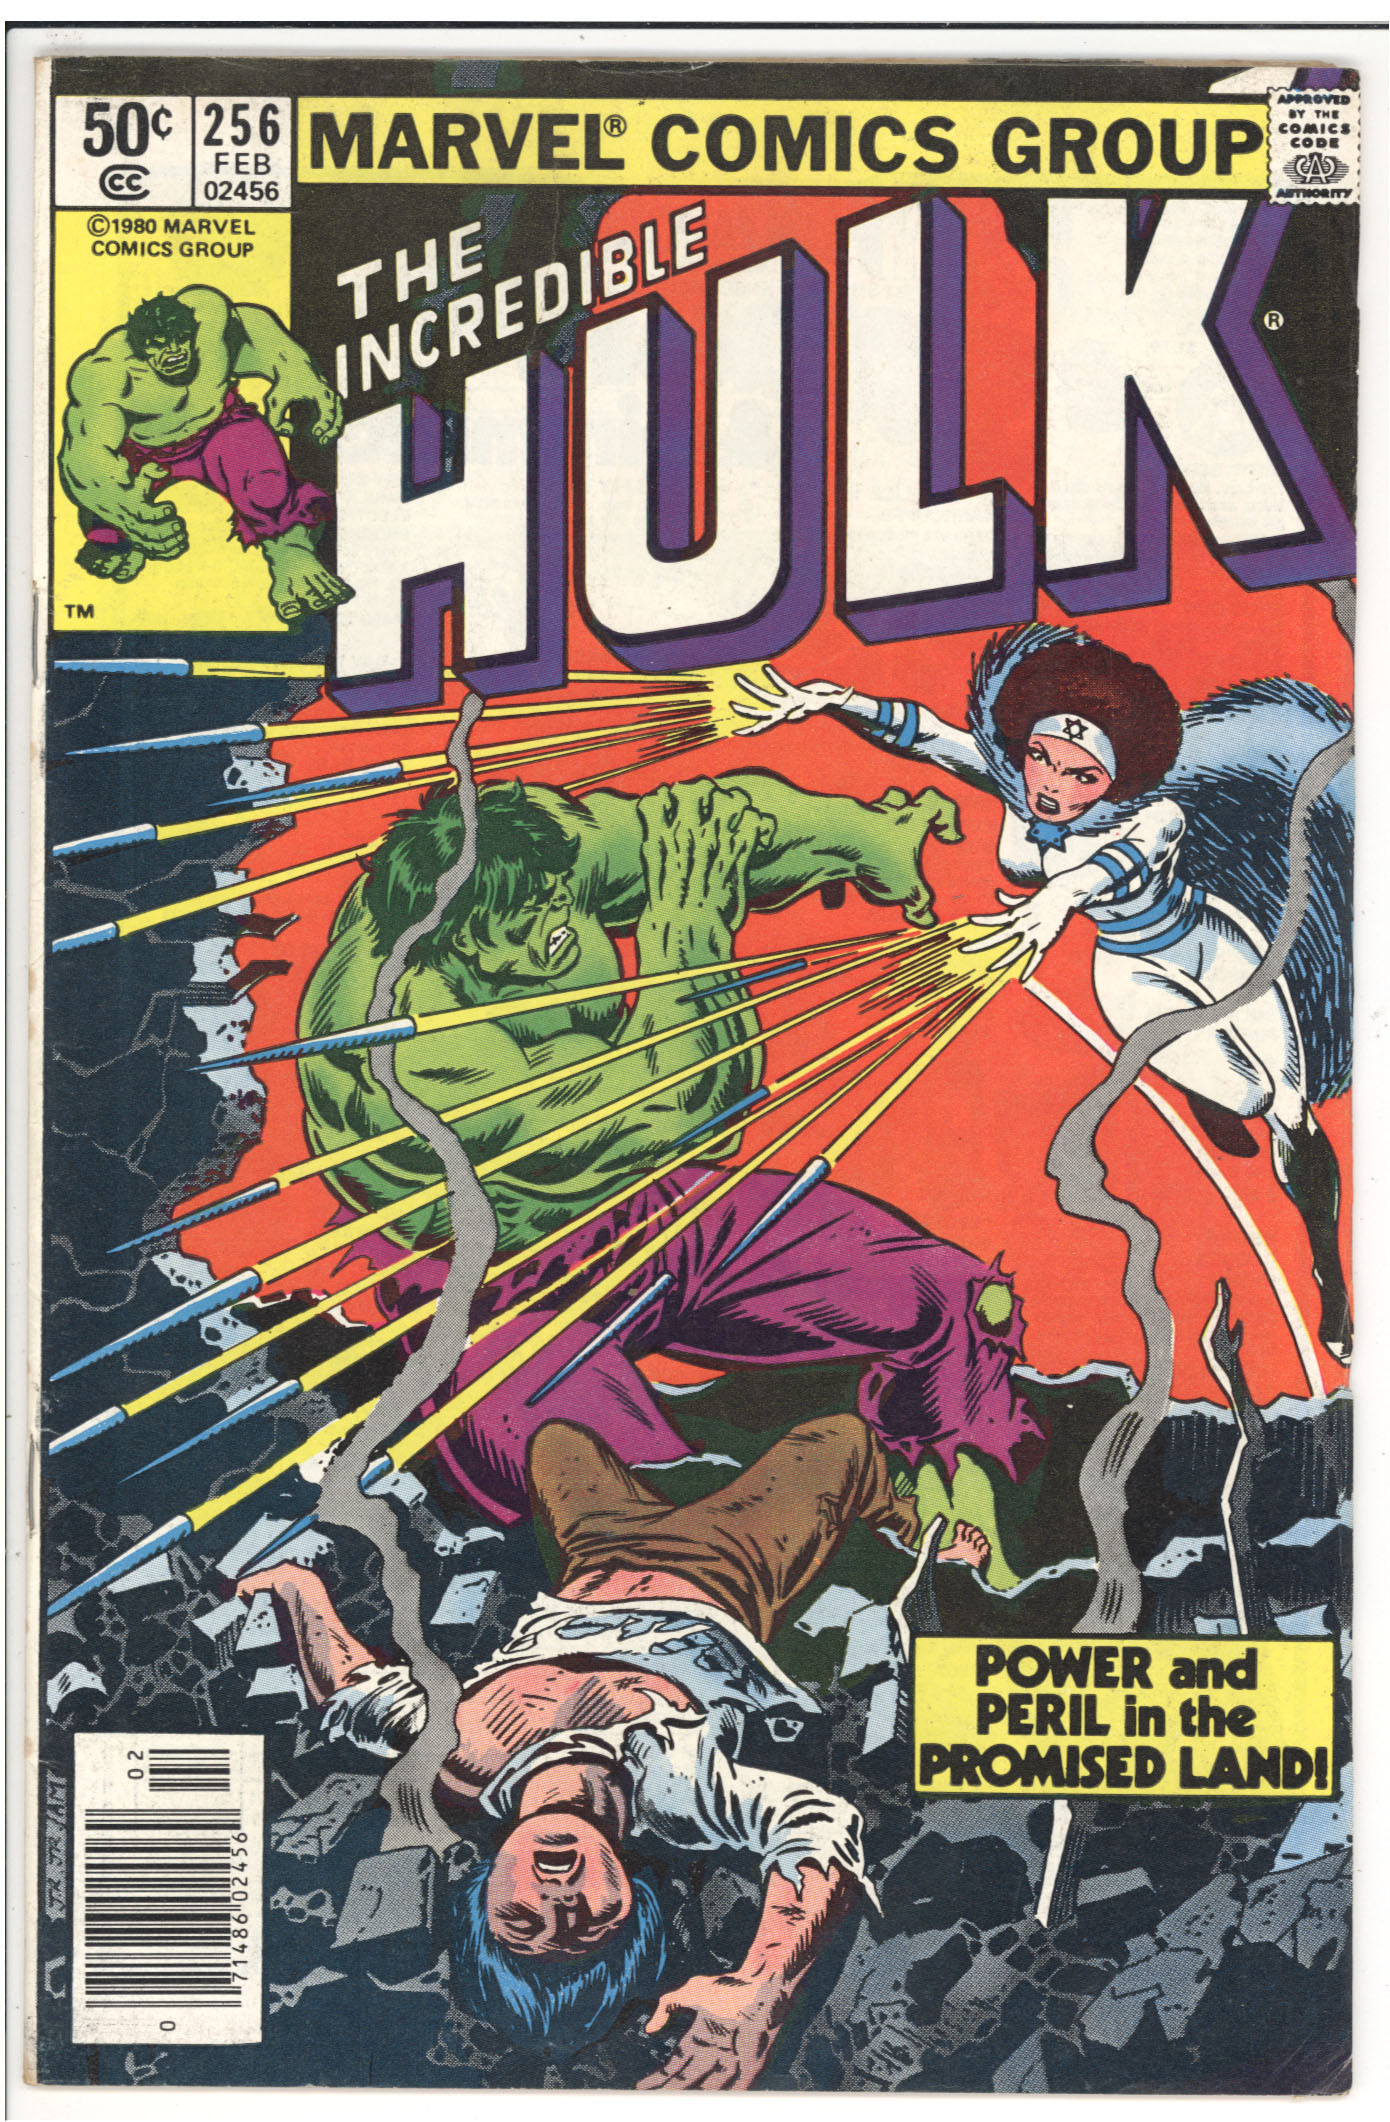 Incredible Hulk #256 front